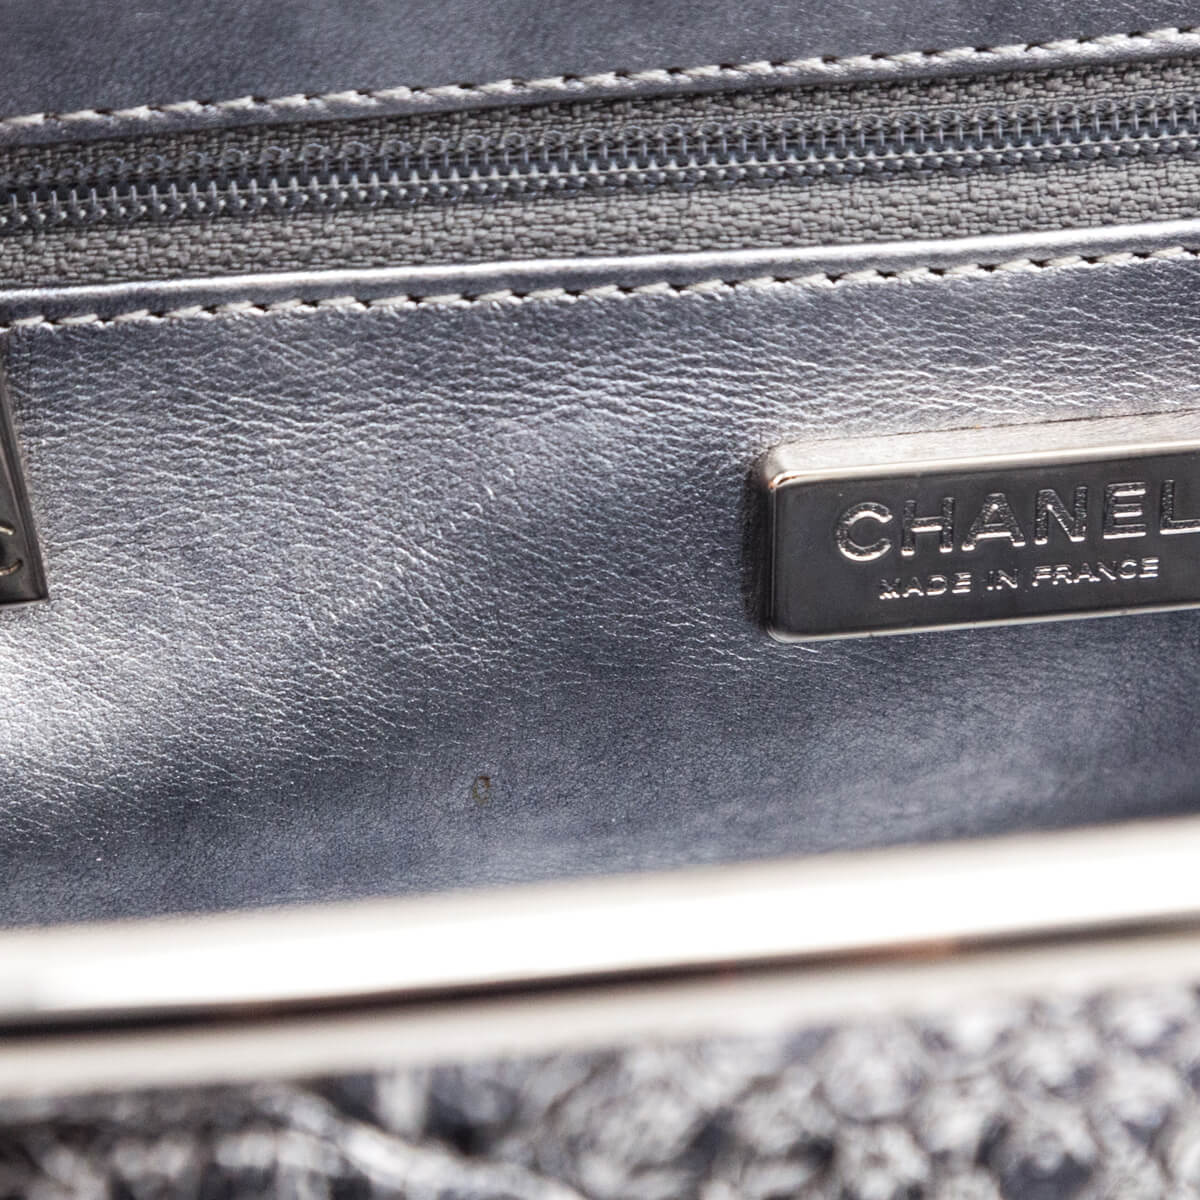 Chanel Metallic Dark Silver Python Timeless Clutch - Chanel Handbags